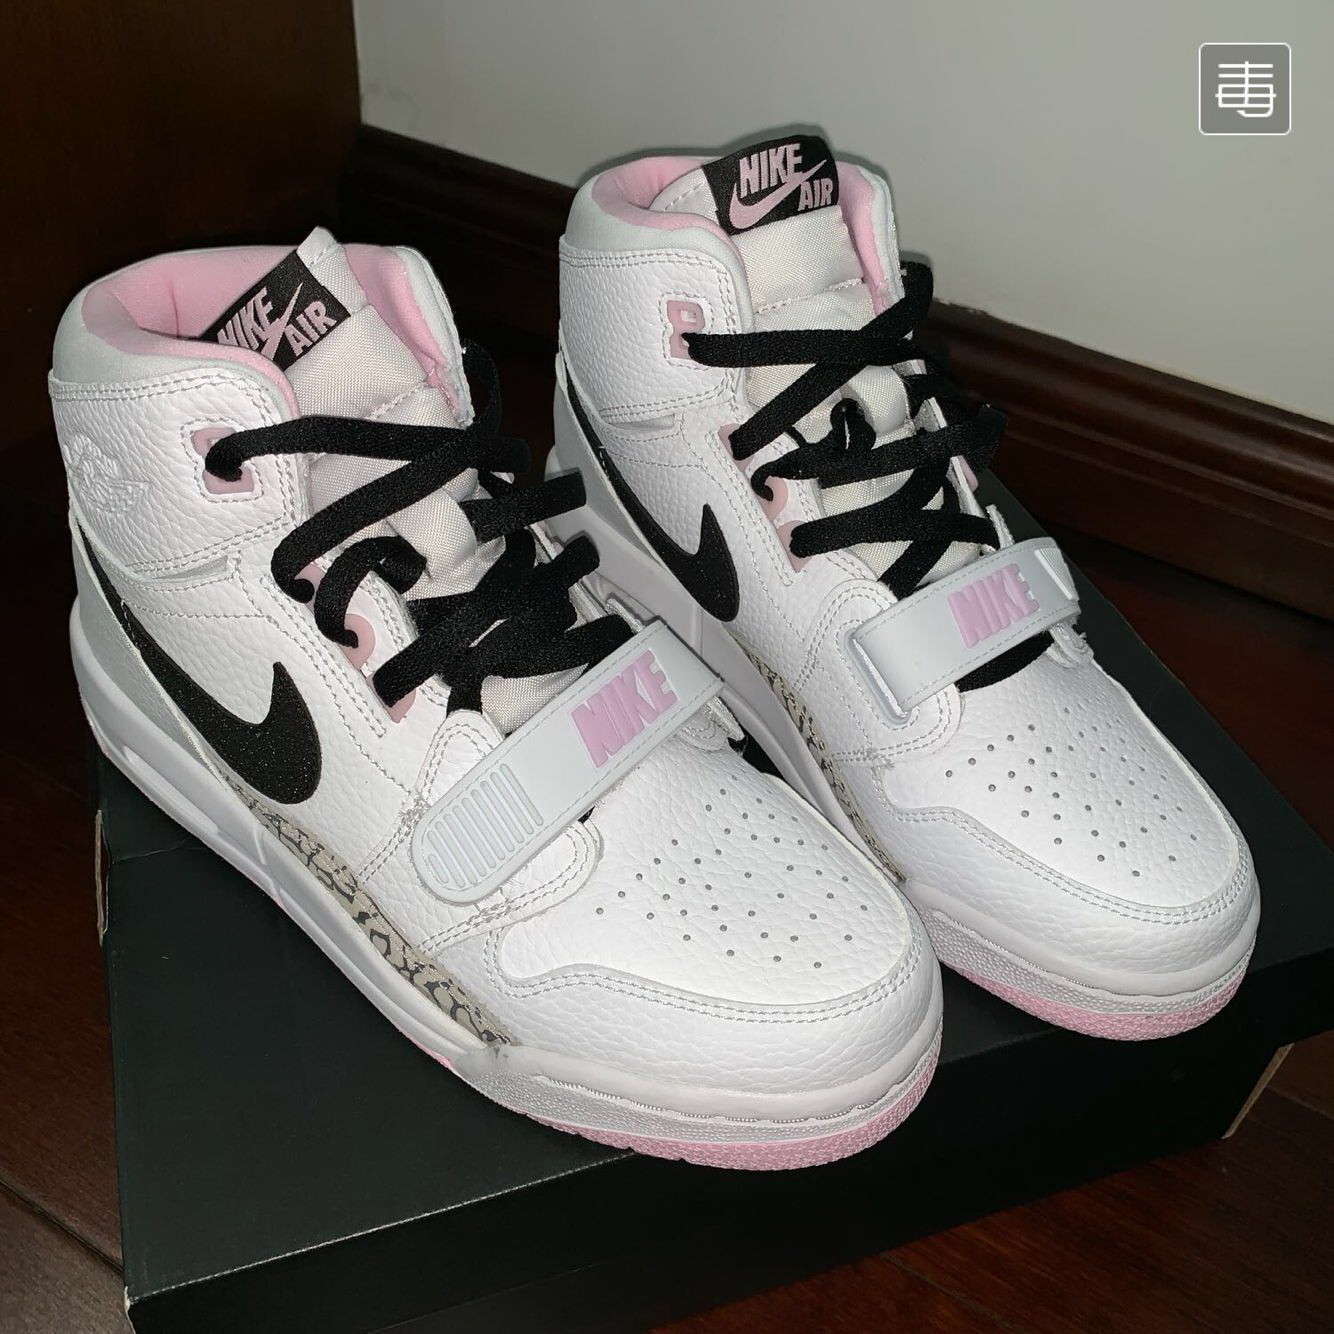 Women Air Jordan Legacy white cherry blossom pink discount Jordan shoes on sales for sale